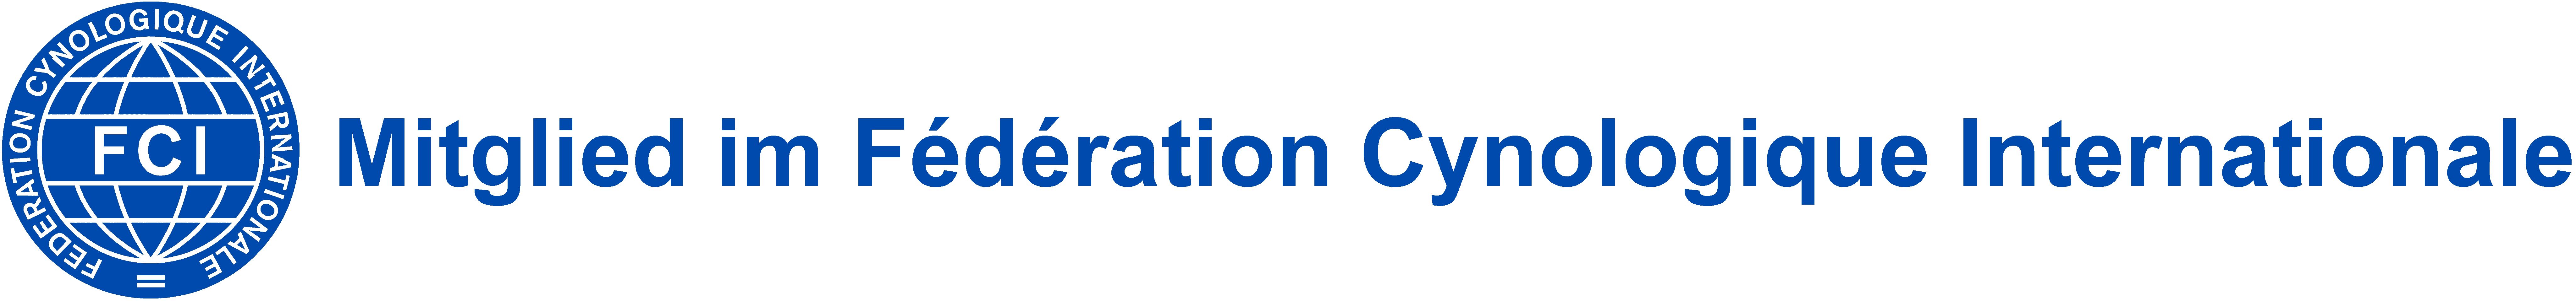 Fédération Cynologique Internationale-Logo